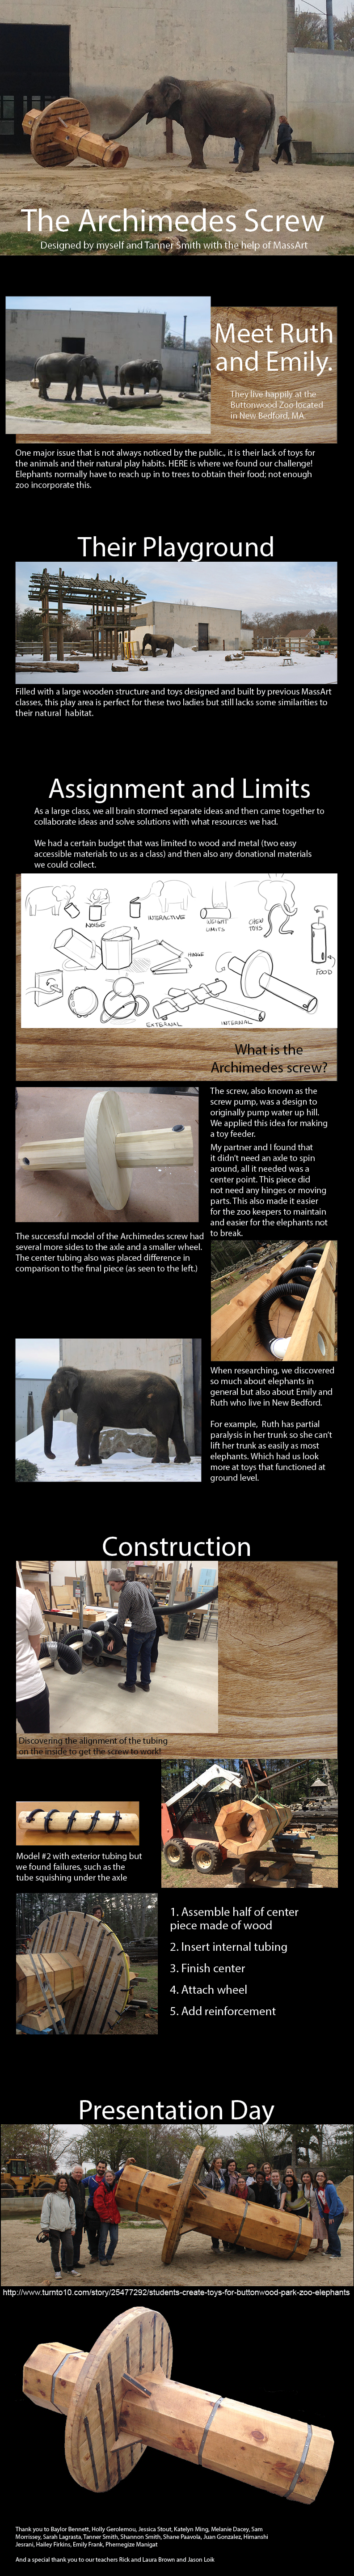 design toys elephants zoo industrial product animals interactive Fun Playful handmade animal toys elephant